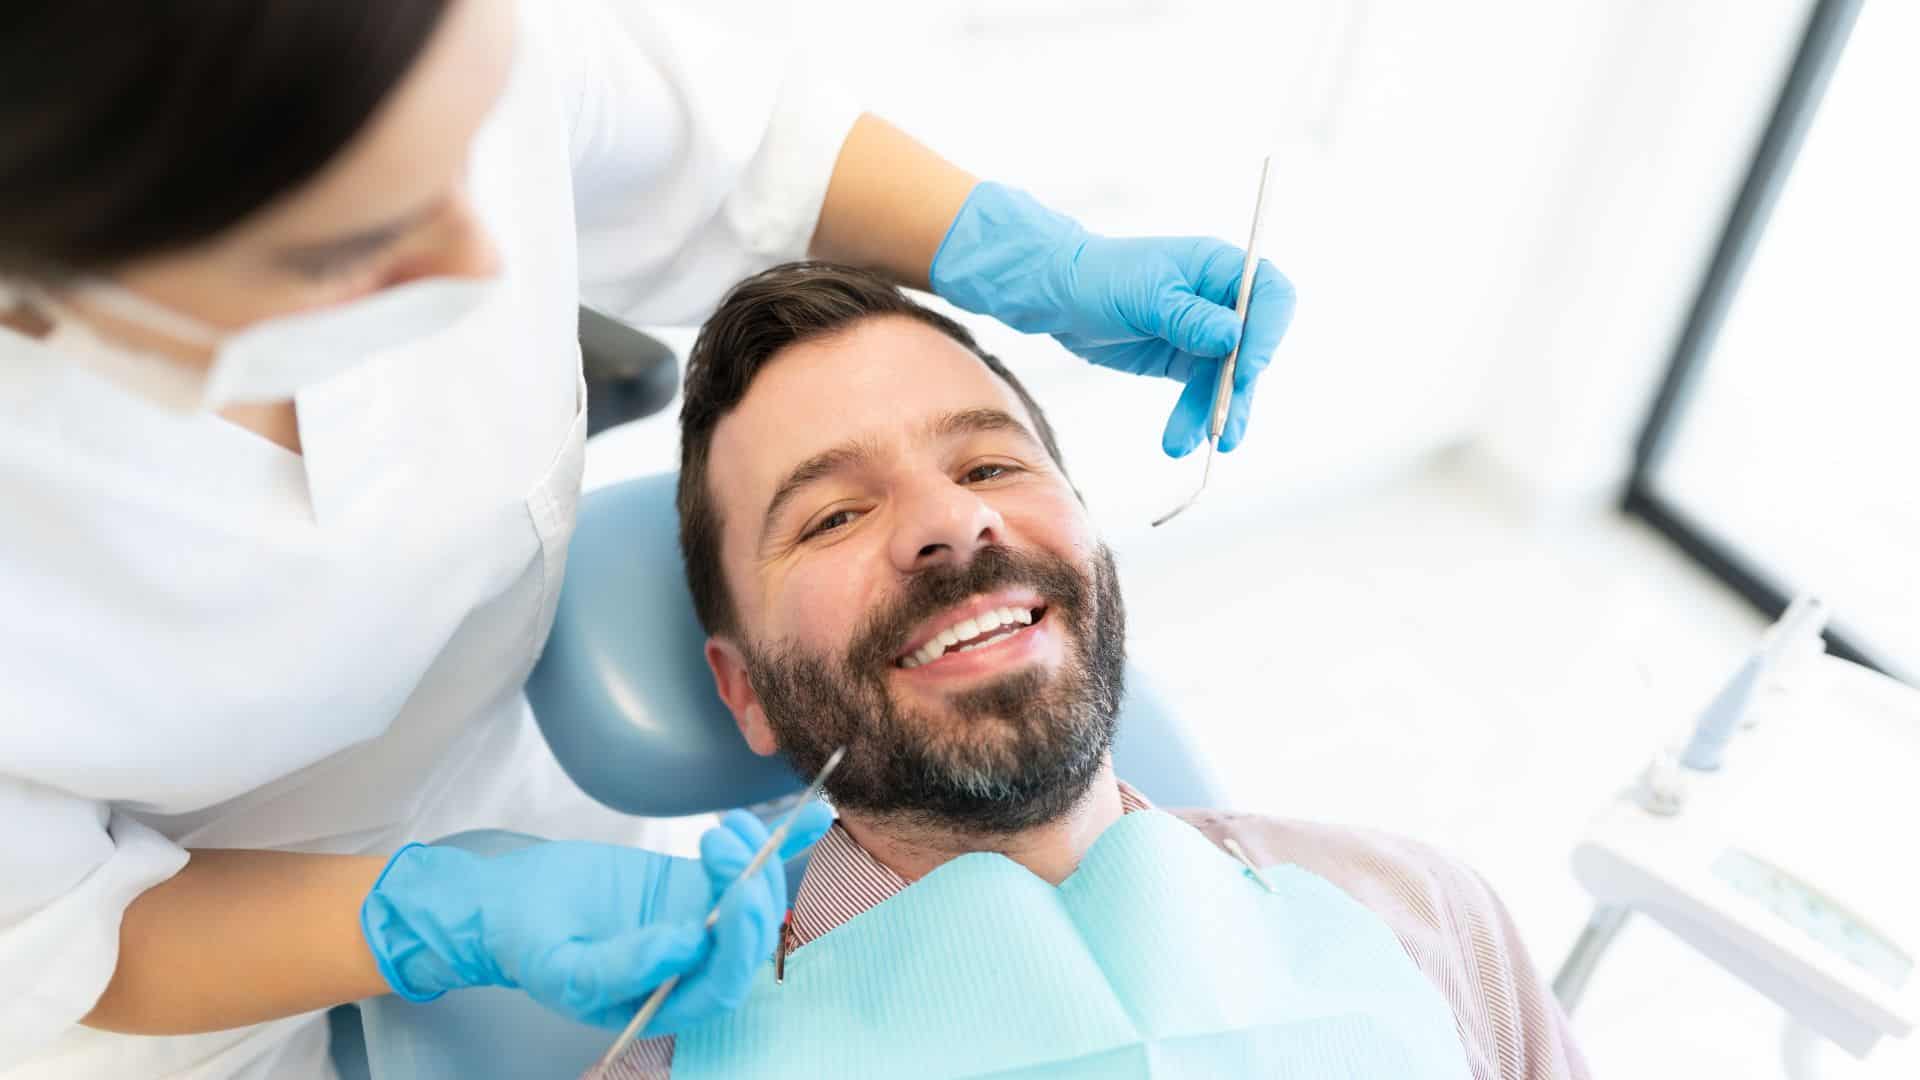 Orthodontic Impaction Cases